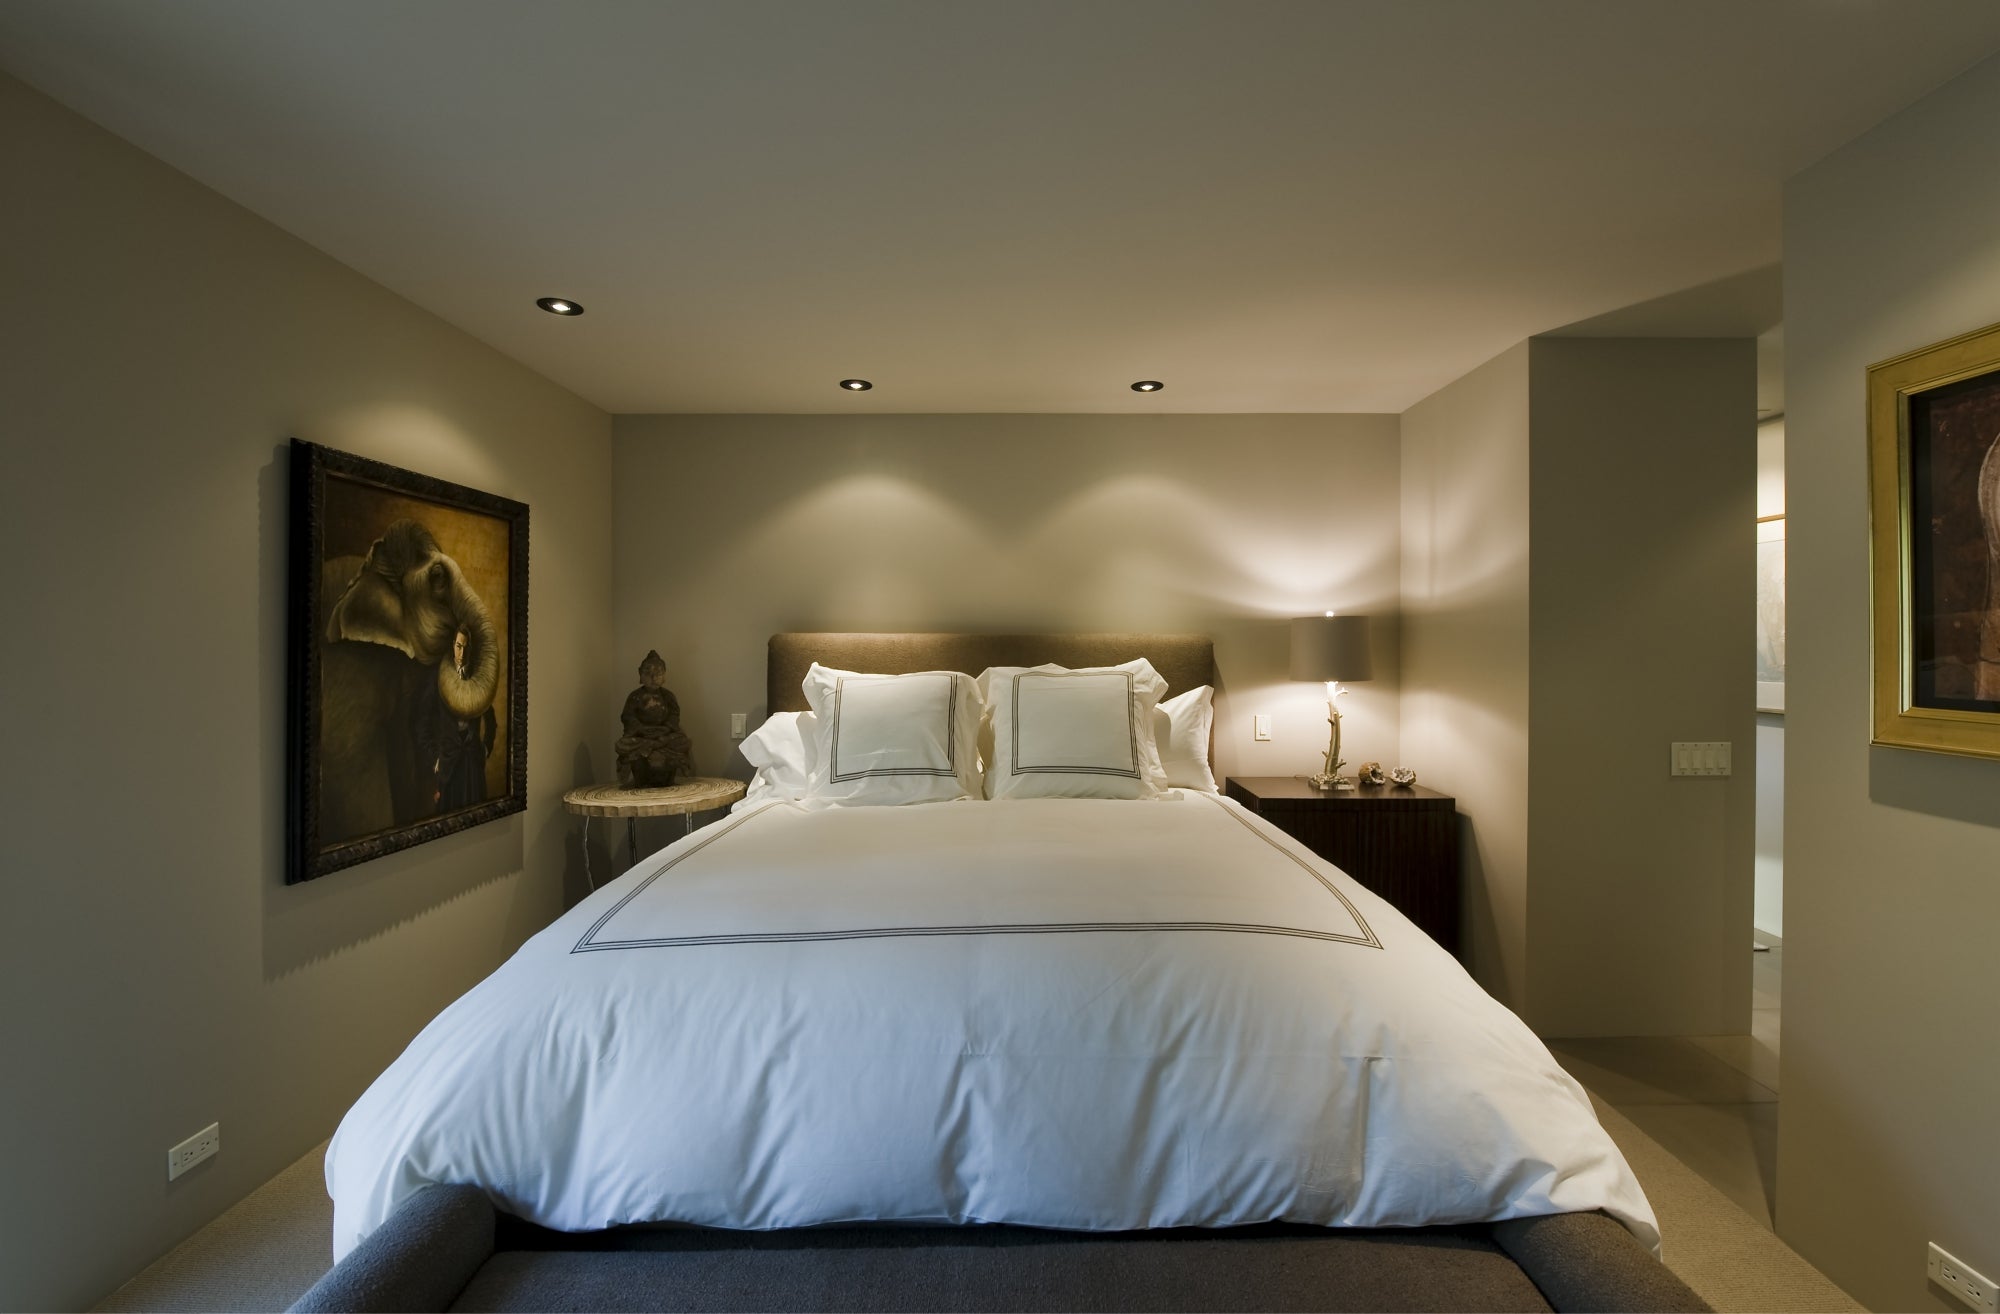 5 Easy Ways to Transform Your Bedroom